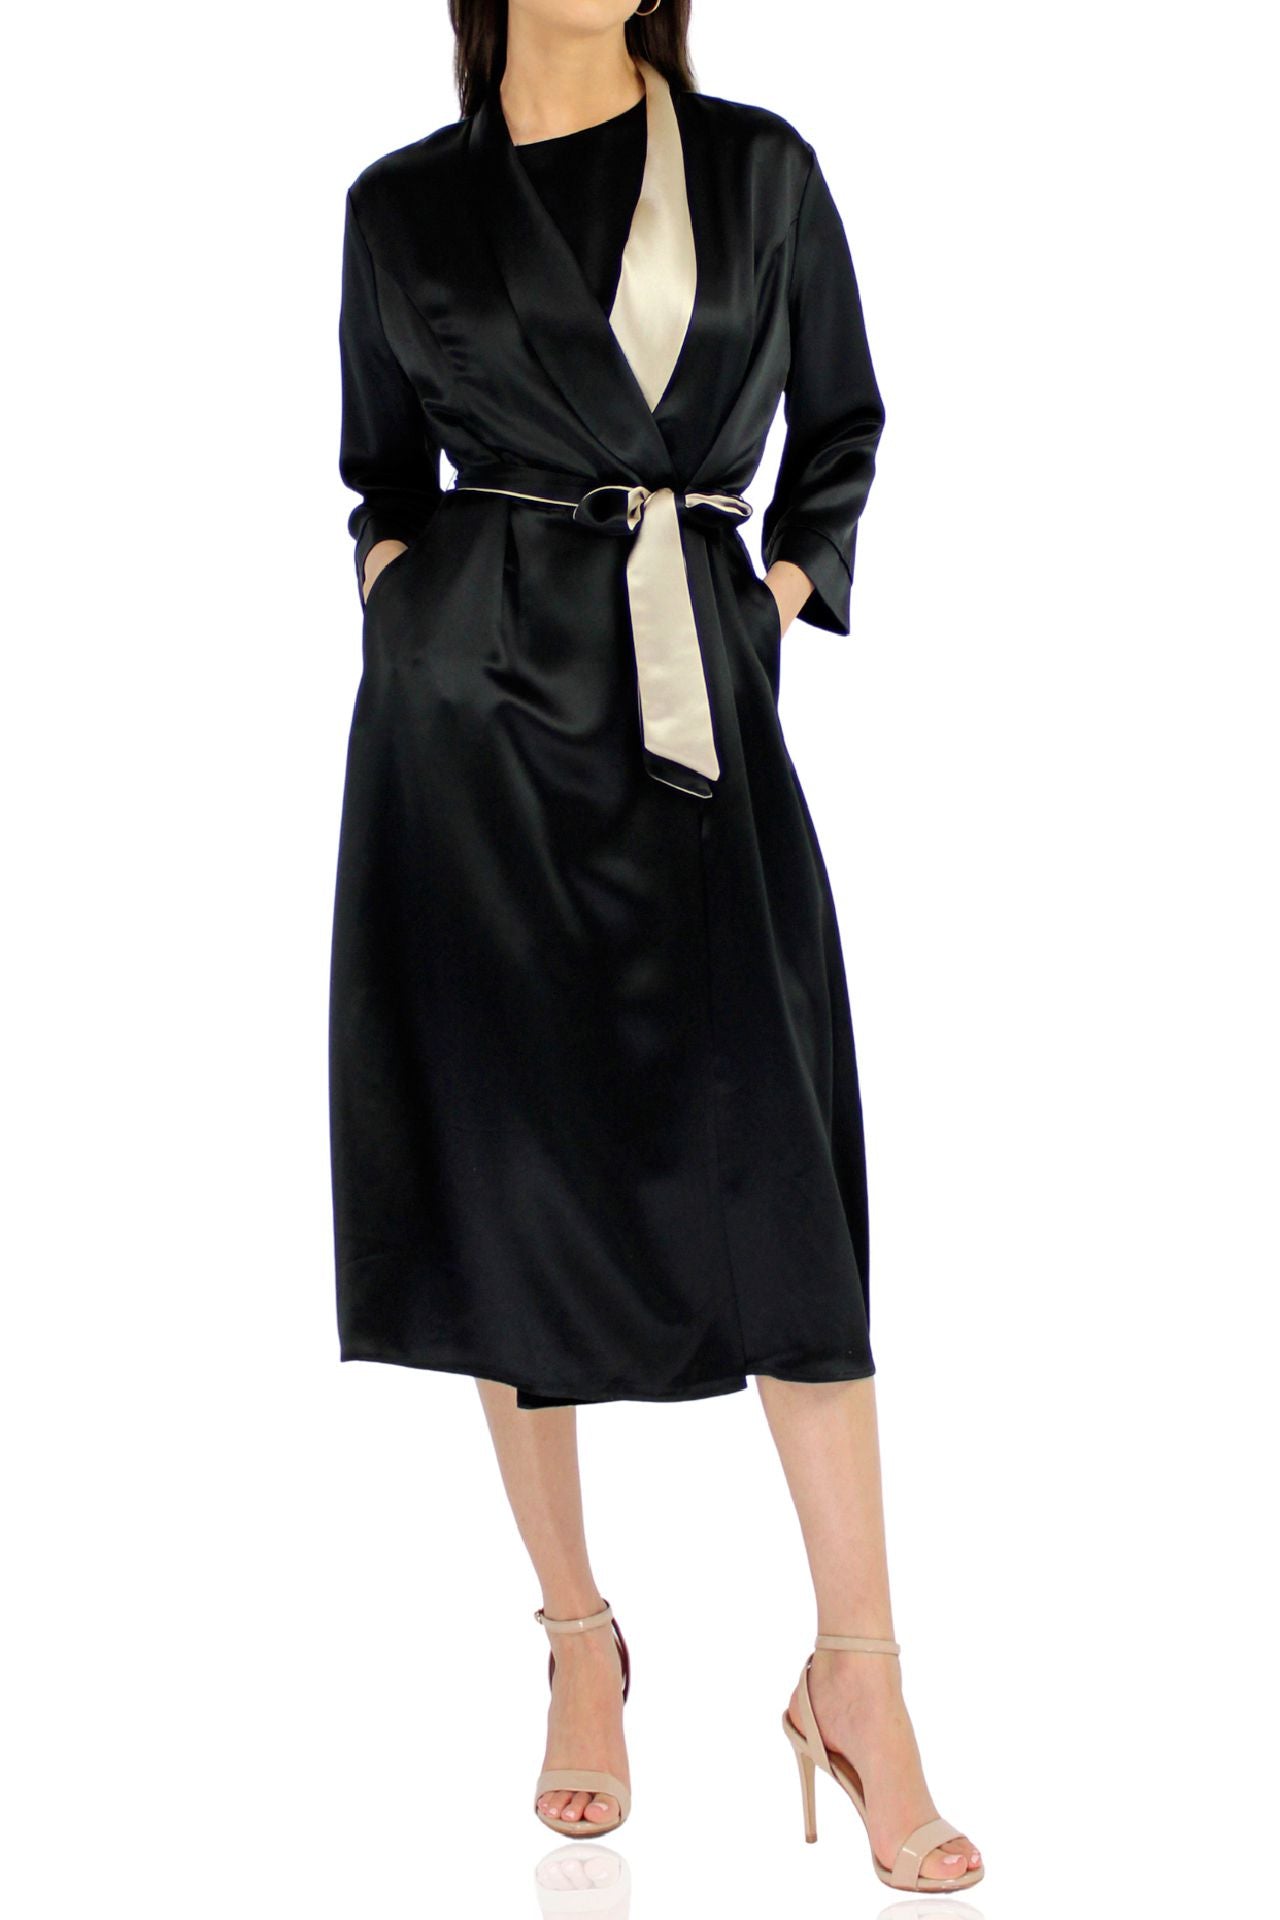 "short kimonos for women" "short silk robe womens" "black silk robe" "Kyle X Shahida"